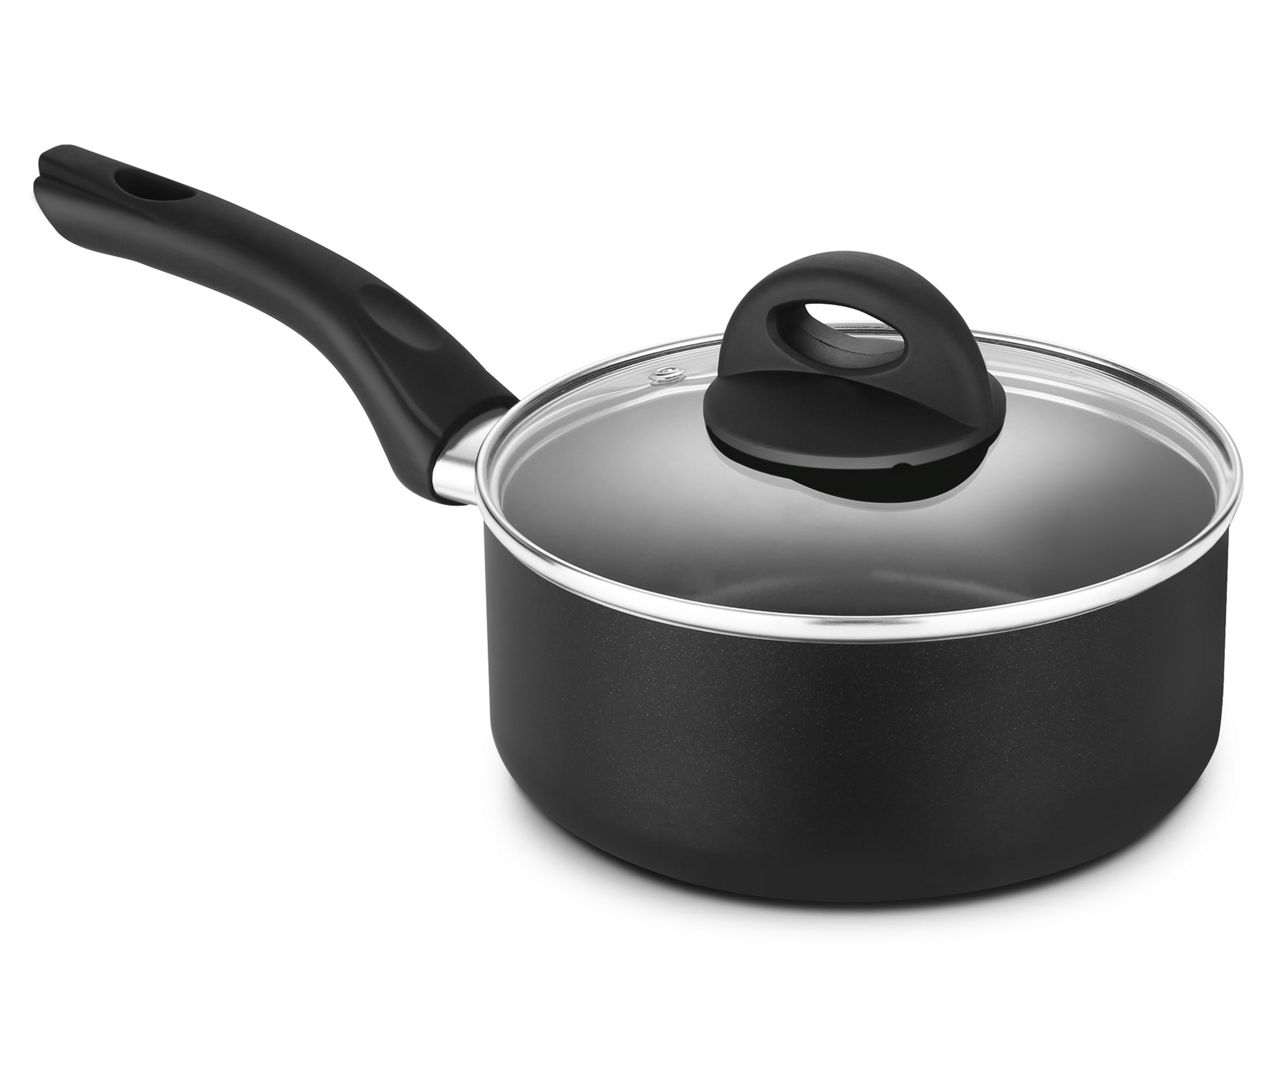 Master Cuisine Stainless Steel 2-Quart Saucepan